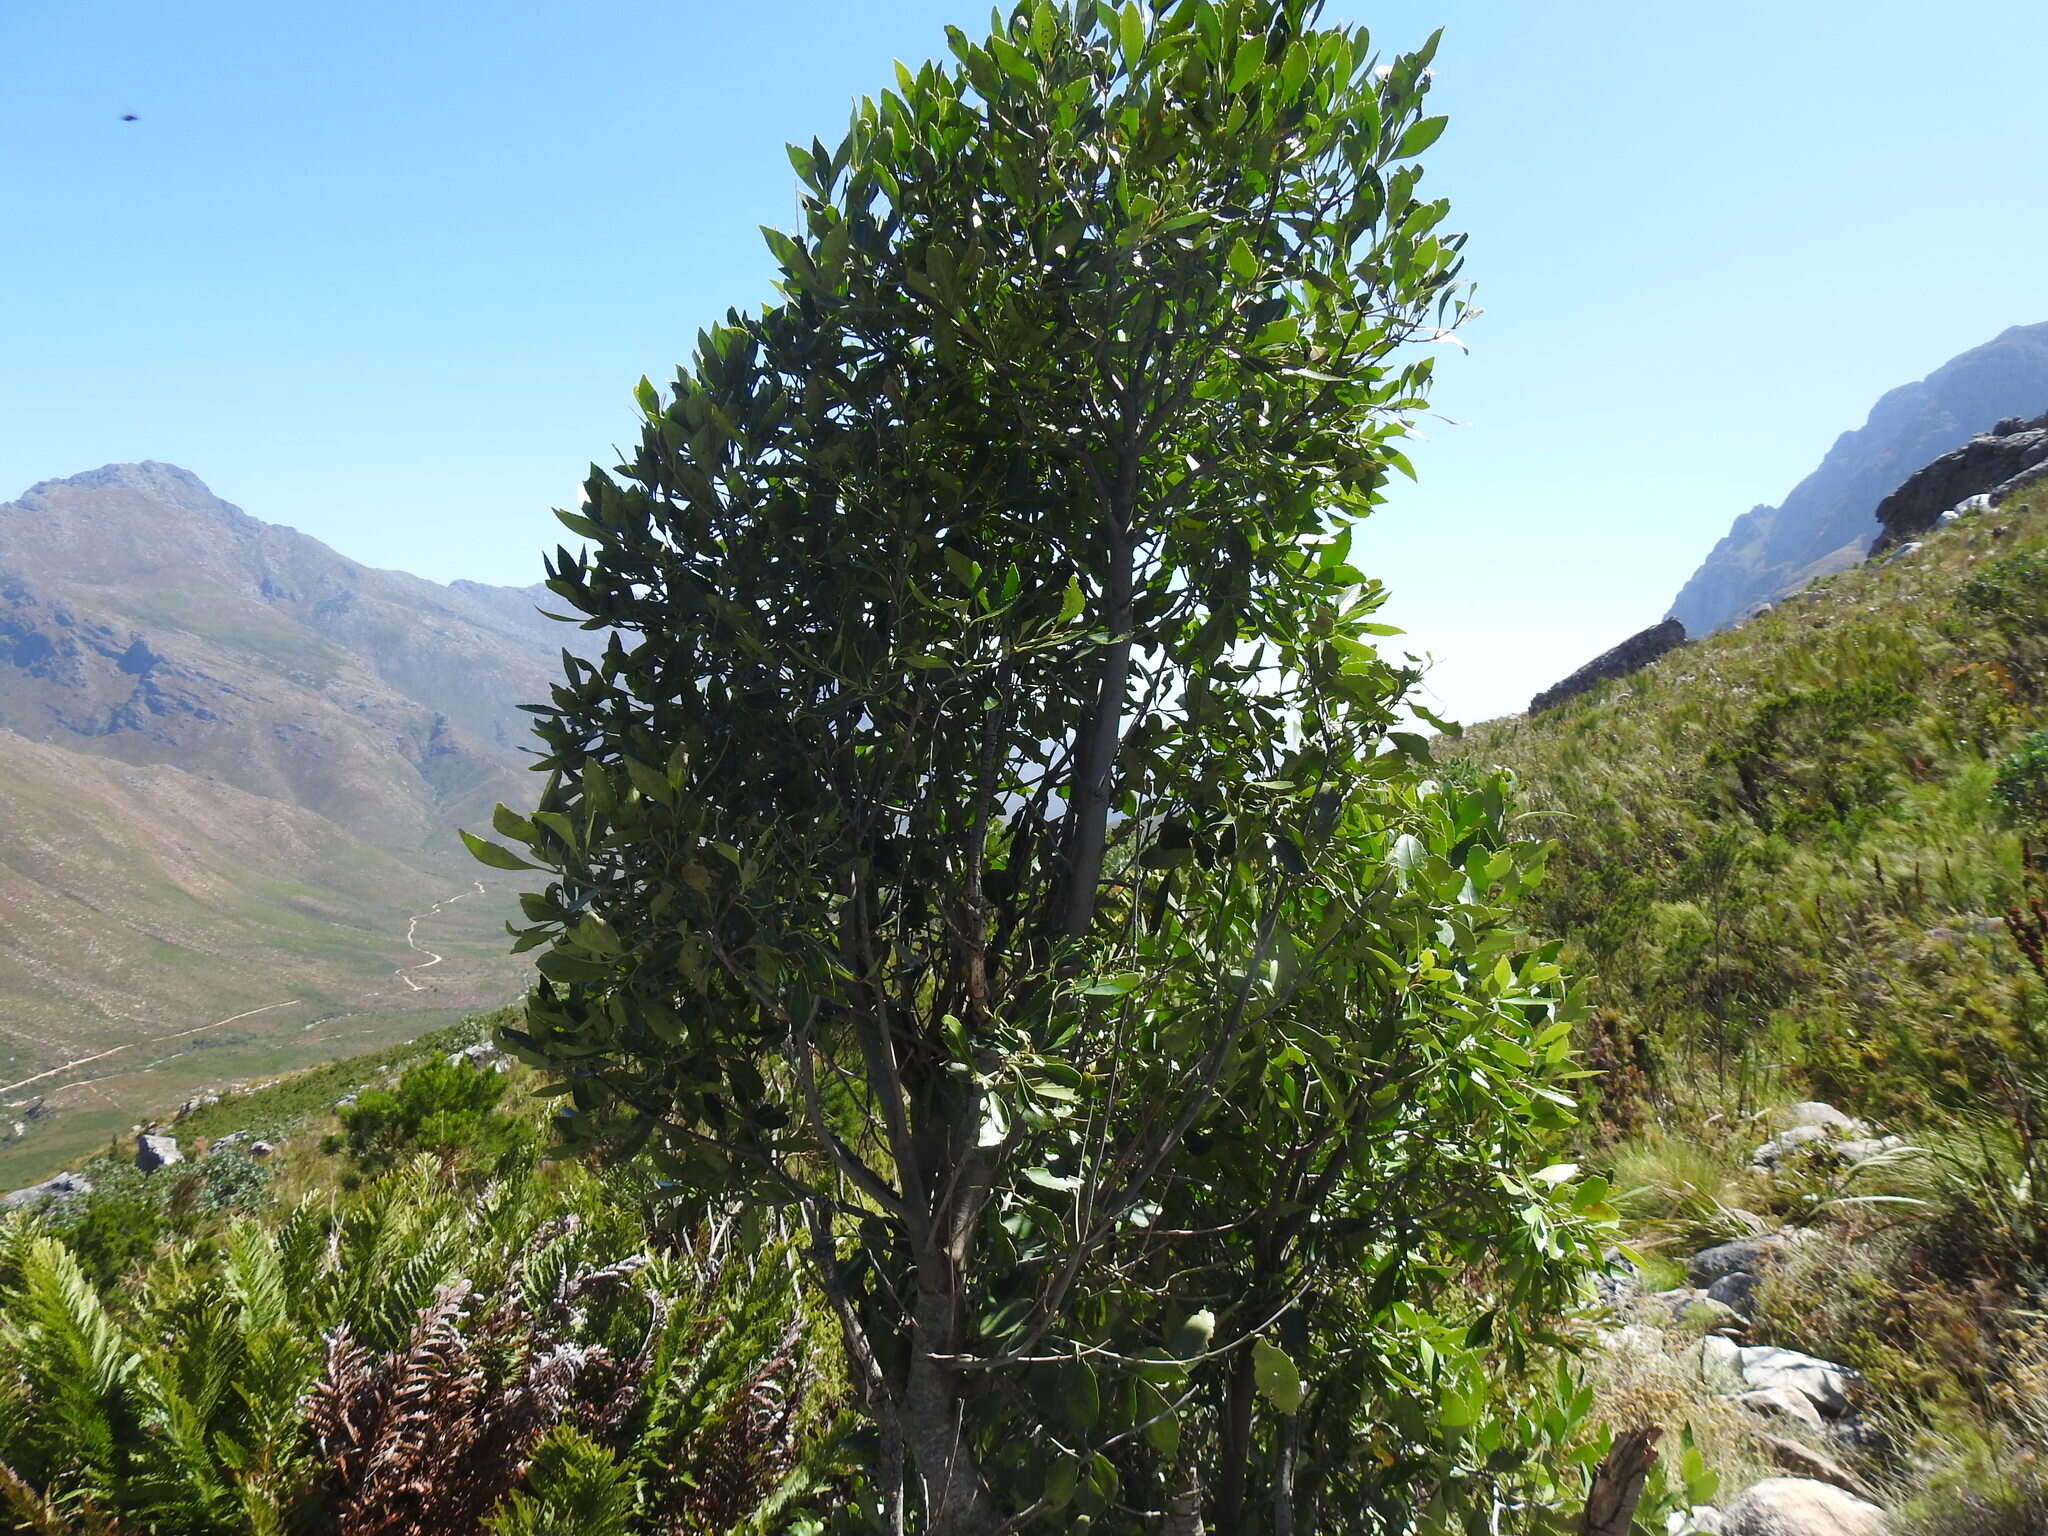 Image of Elaeodendron schinoides Spreng.